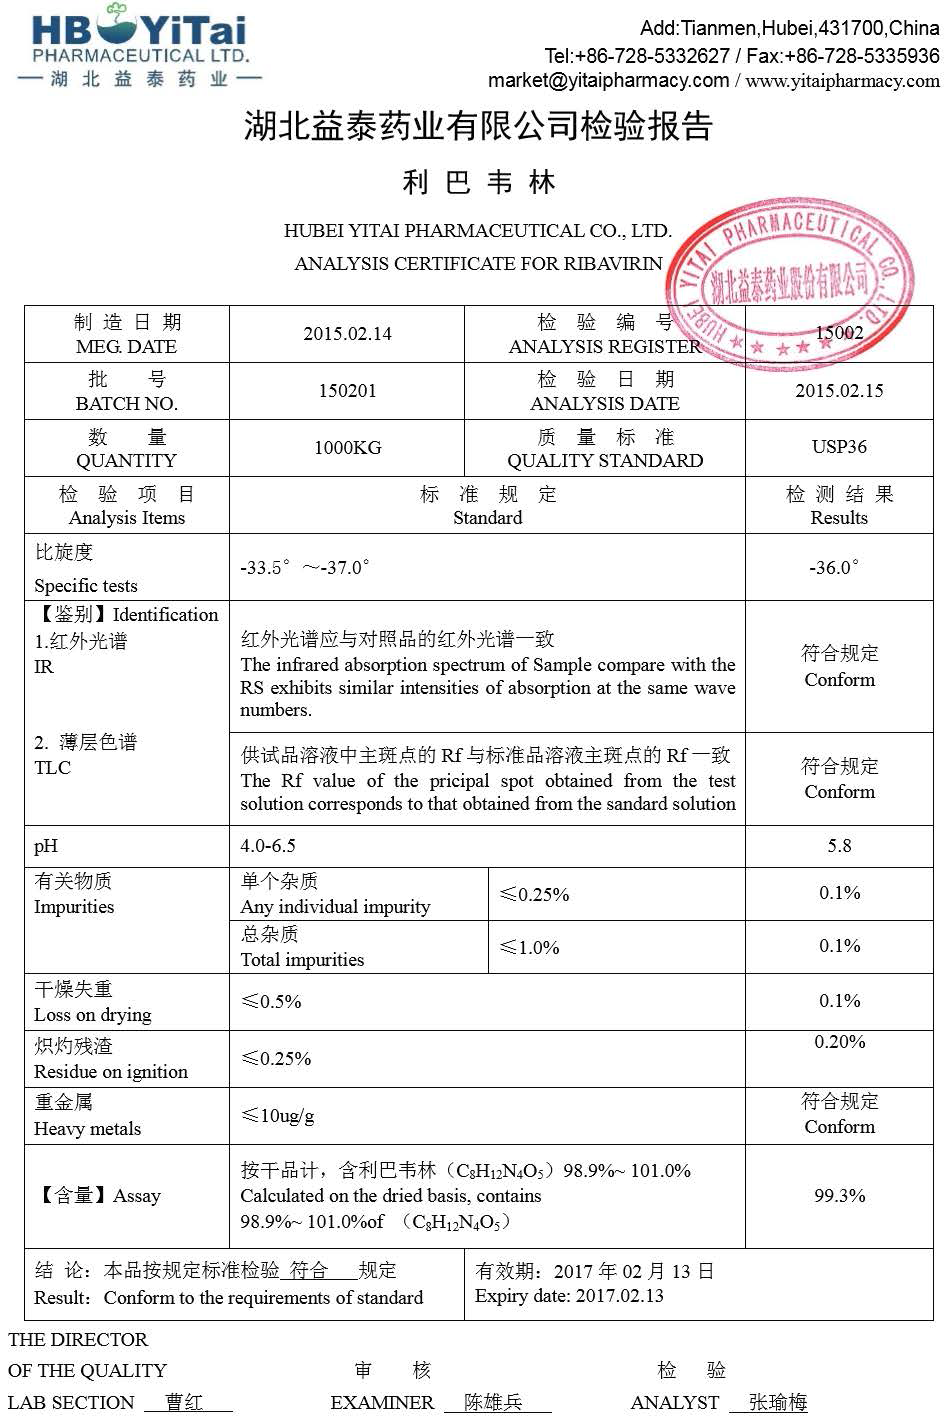 Hubei-Yitai 사에서 제공한 품질보증서